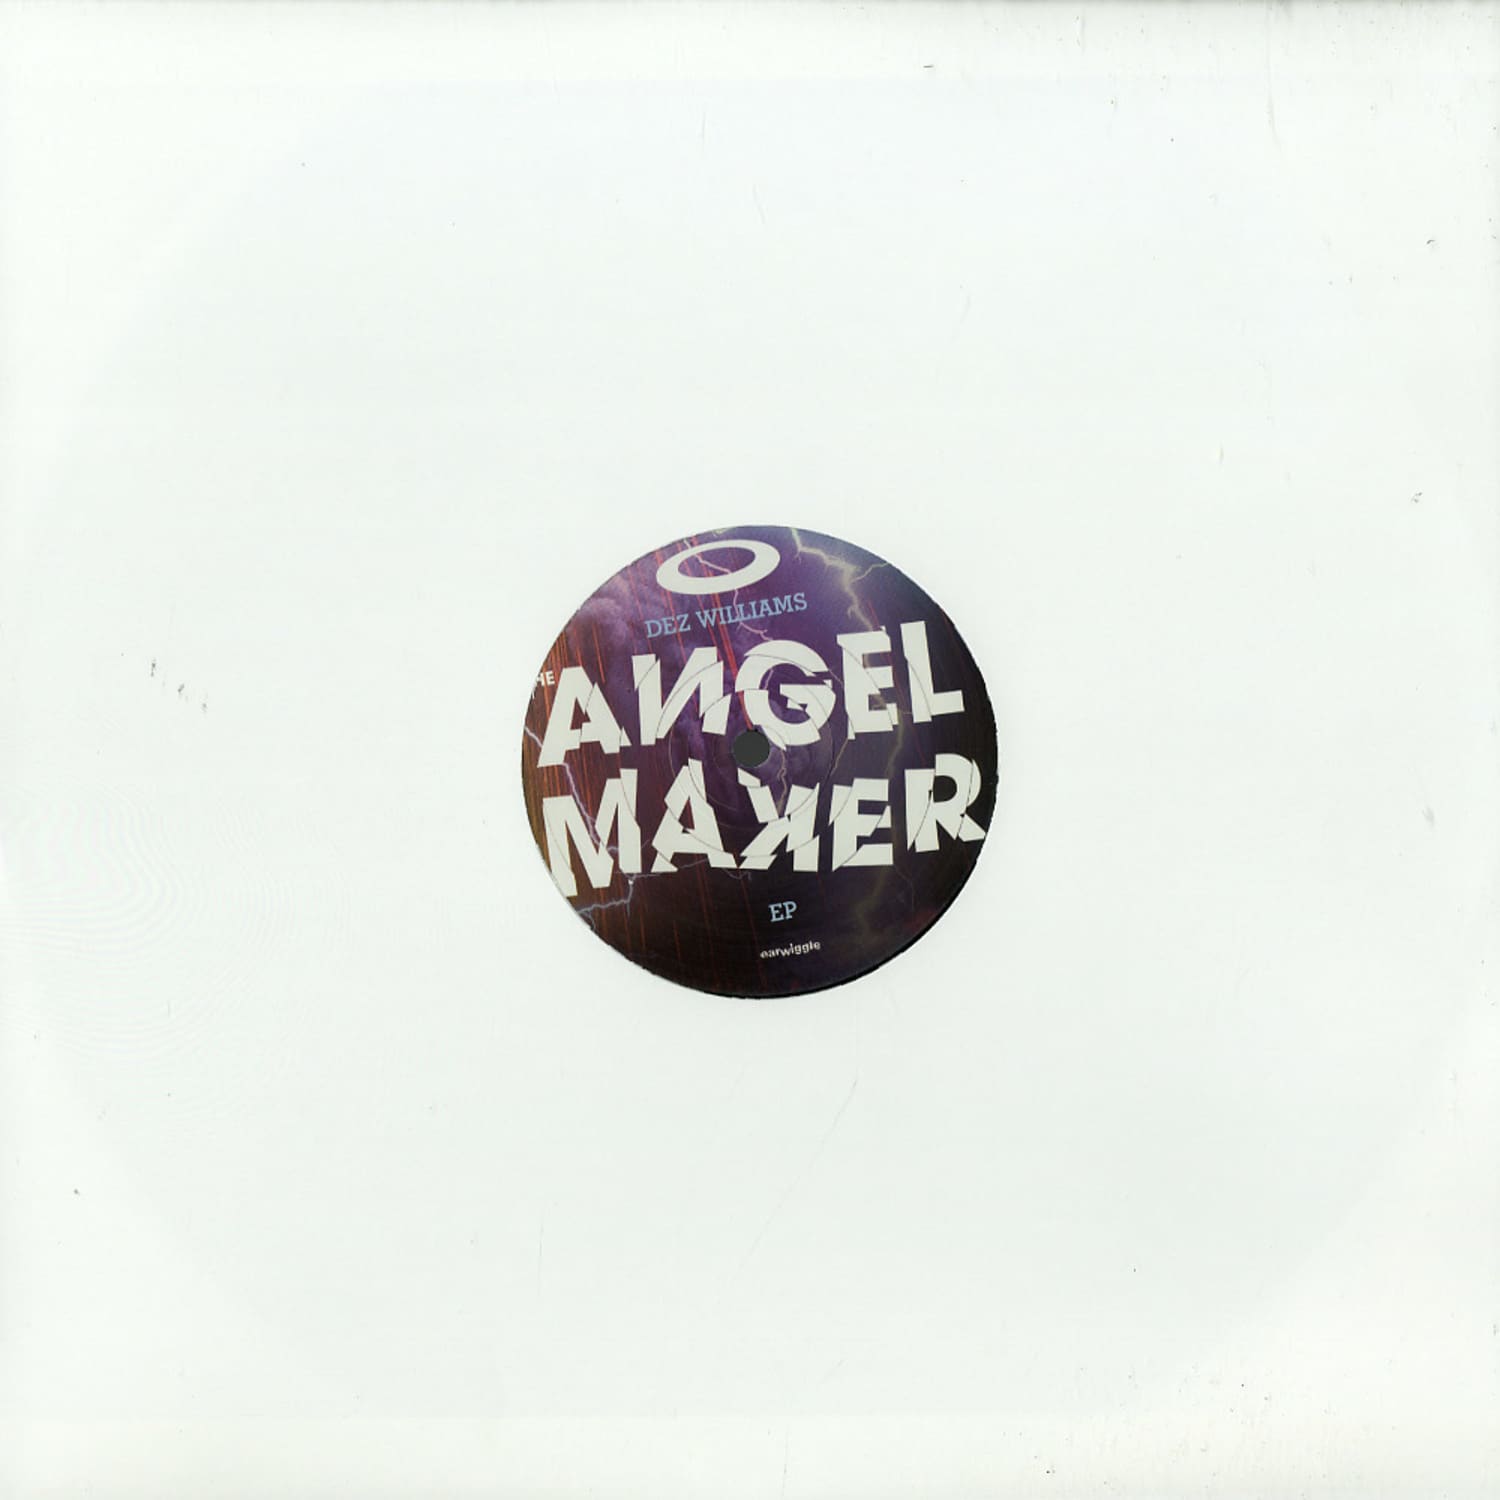 Dez Williams - THE ANGEL MAKER EP